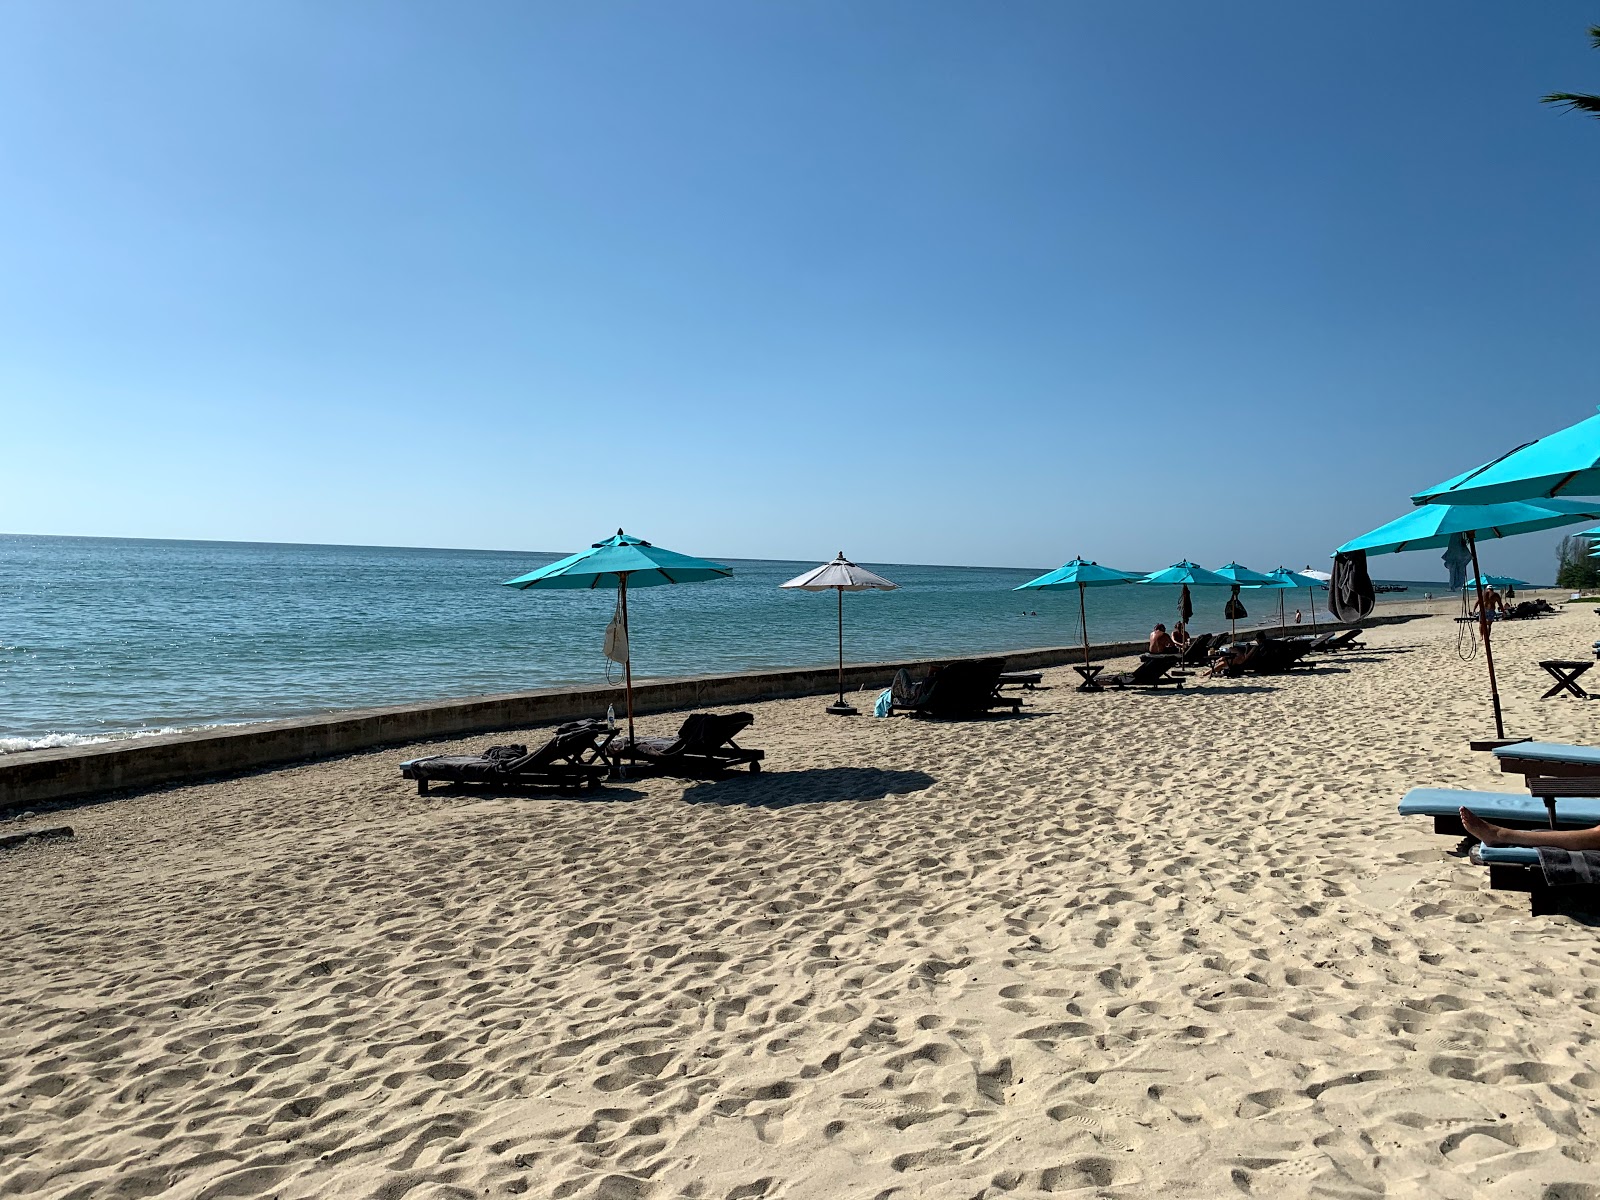 Hat Thap Tawan Beach'in fotoğrafı geniş plaj ile birlikte